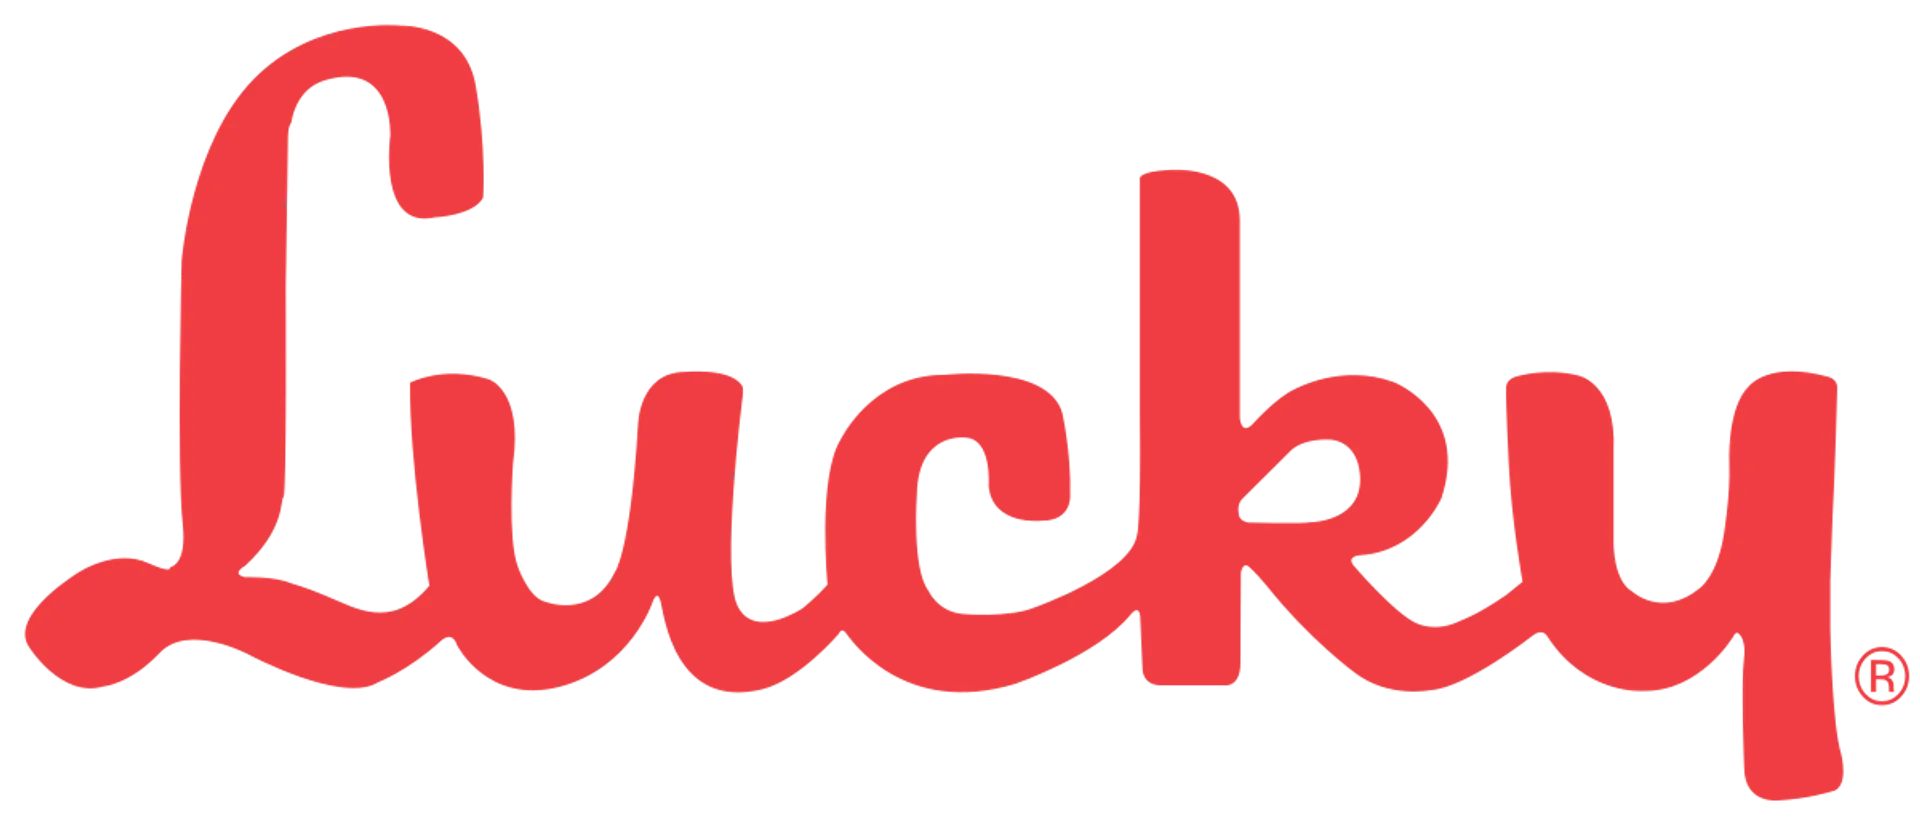 LUCKY SUPERMARKETS logo